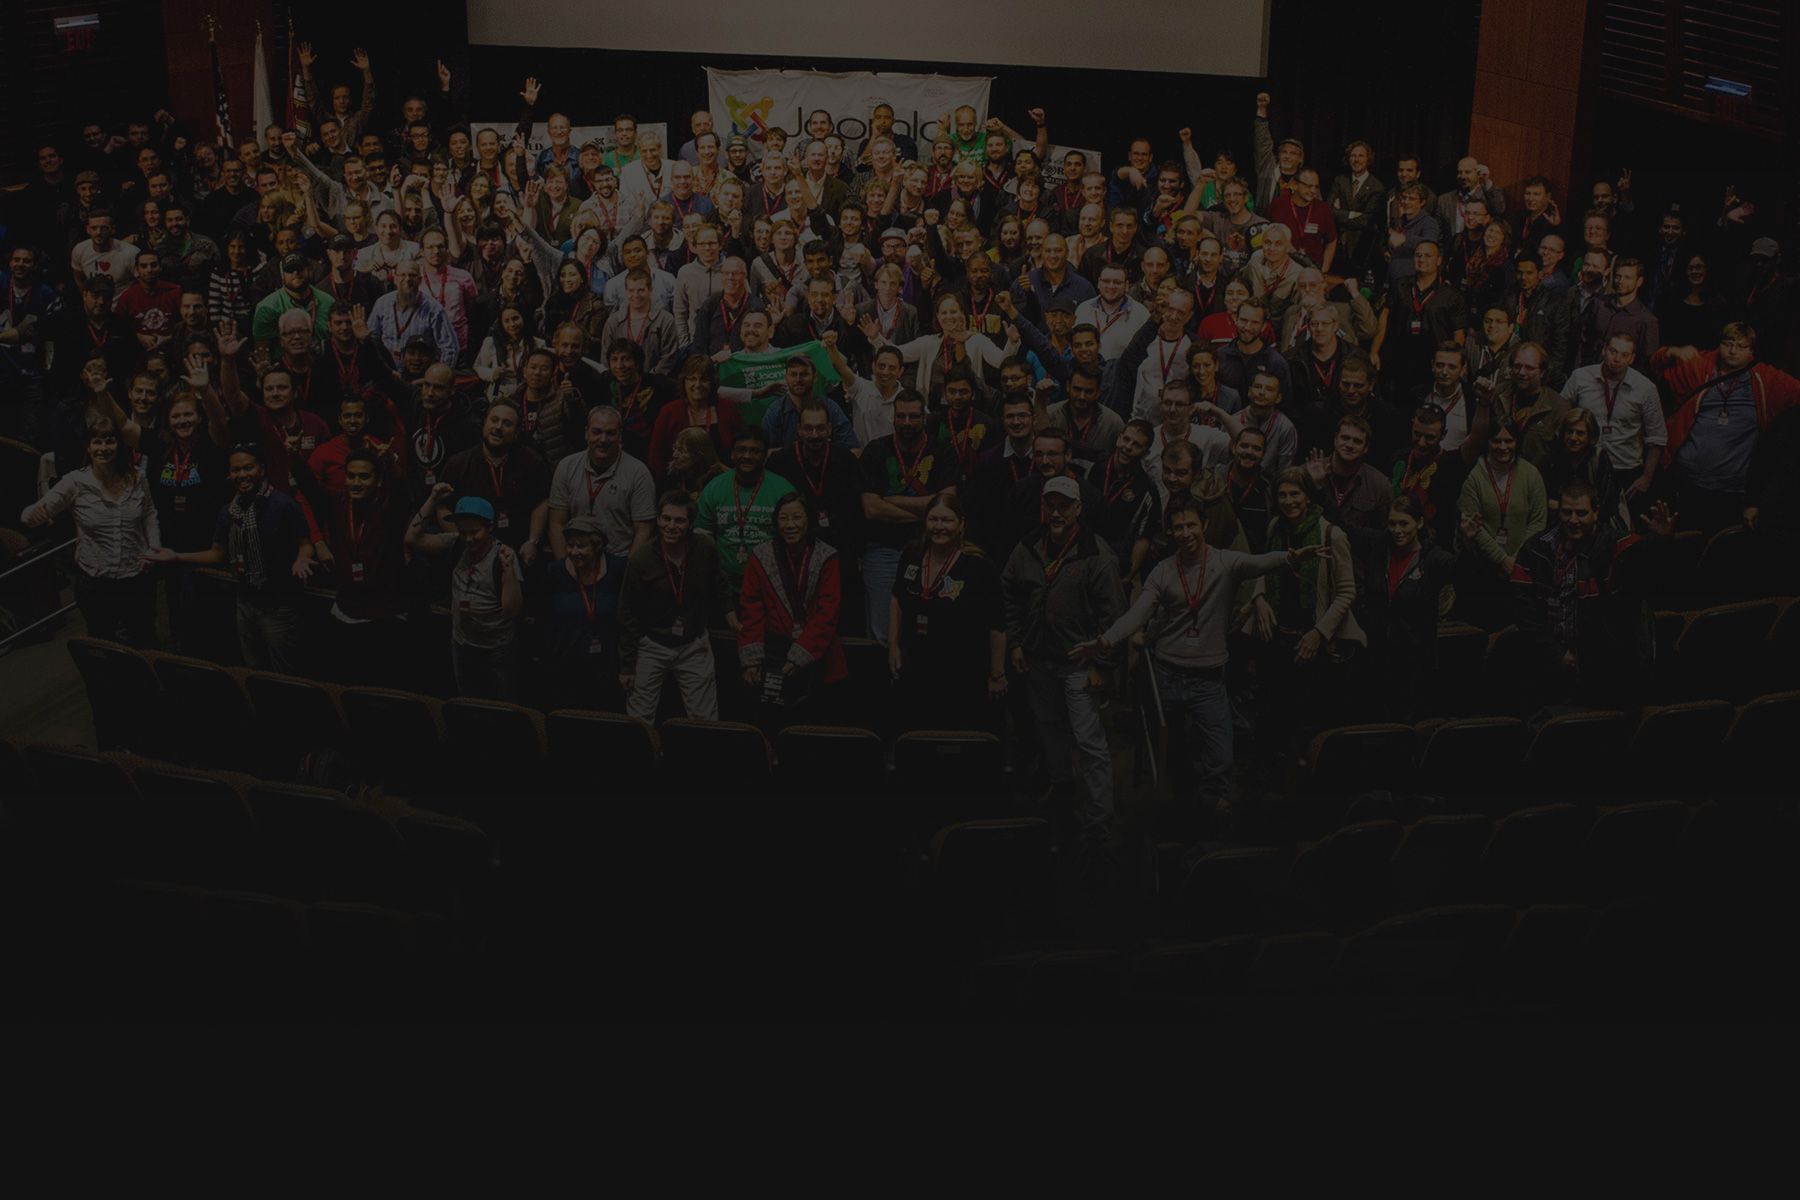 Joomla World Conference - Boston 2013